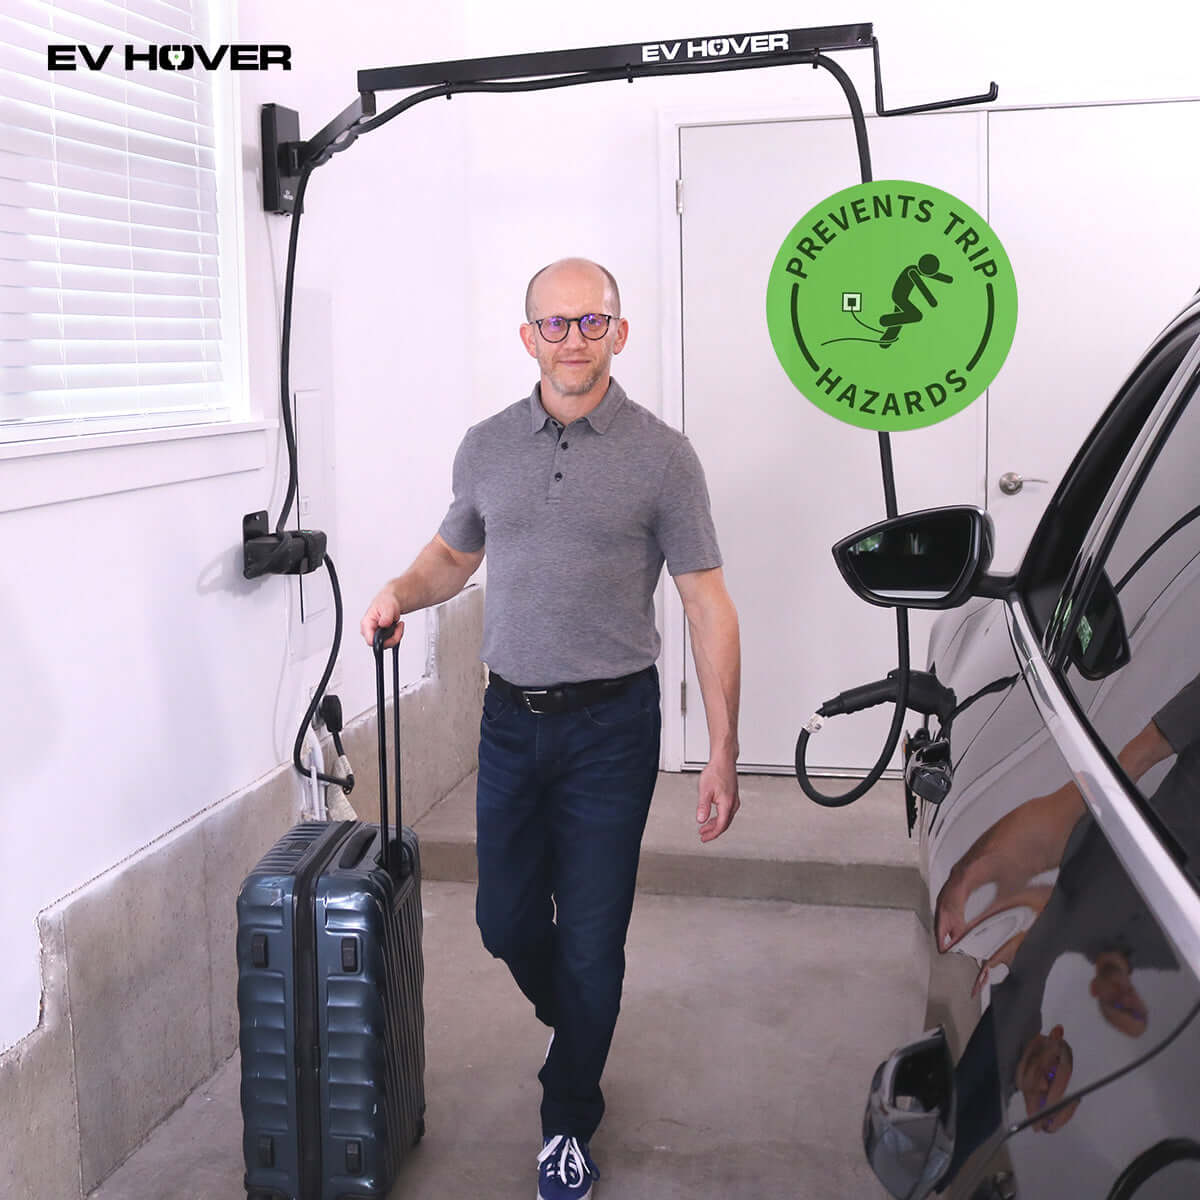 EV Hover